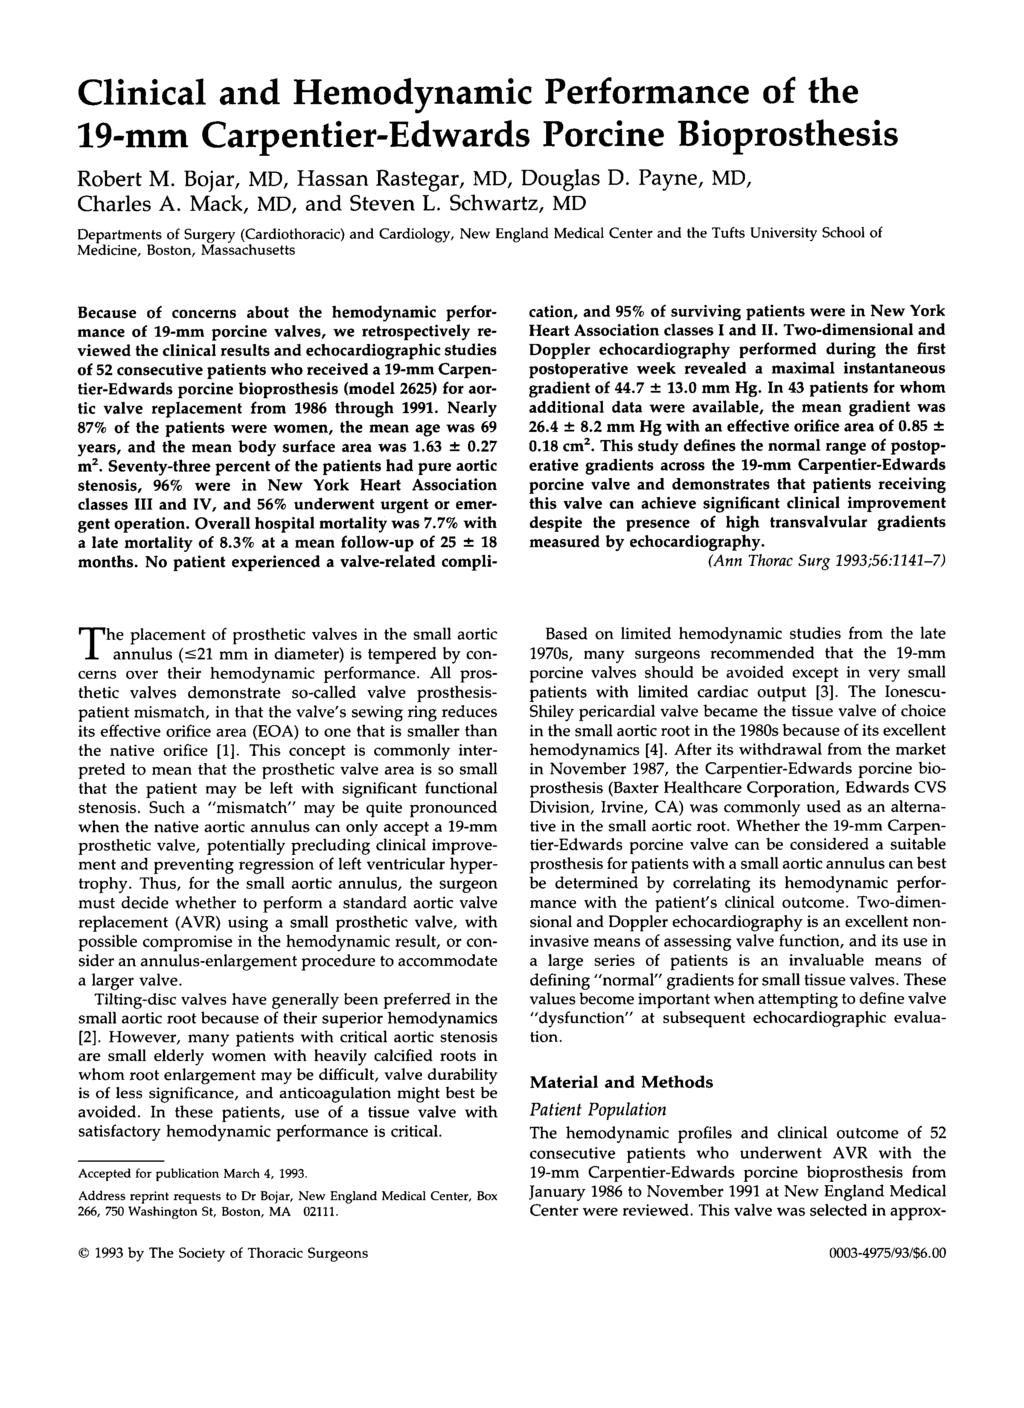 Clinical and Hemodynamic Performance of the 19-mm Carpentier-Edwards Porcine Bioprosthesis Robert M. Bojar, MD, Hassan Rastegar, MD, Douglas D. Payne, MD, Charles A. Mack, MD, and Steven L.